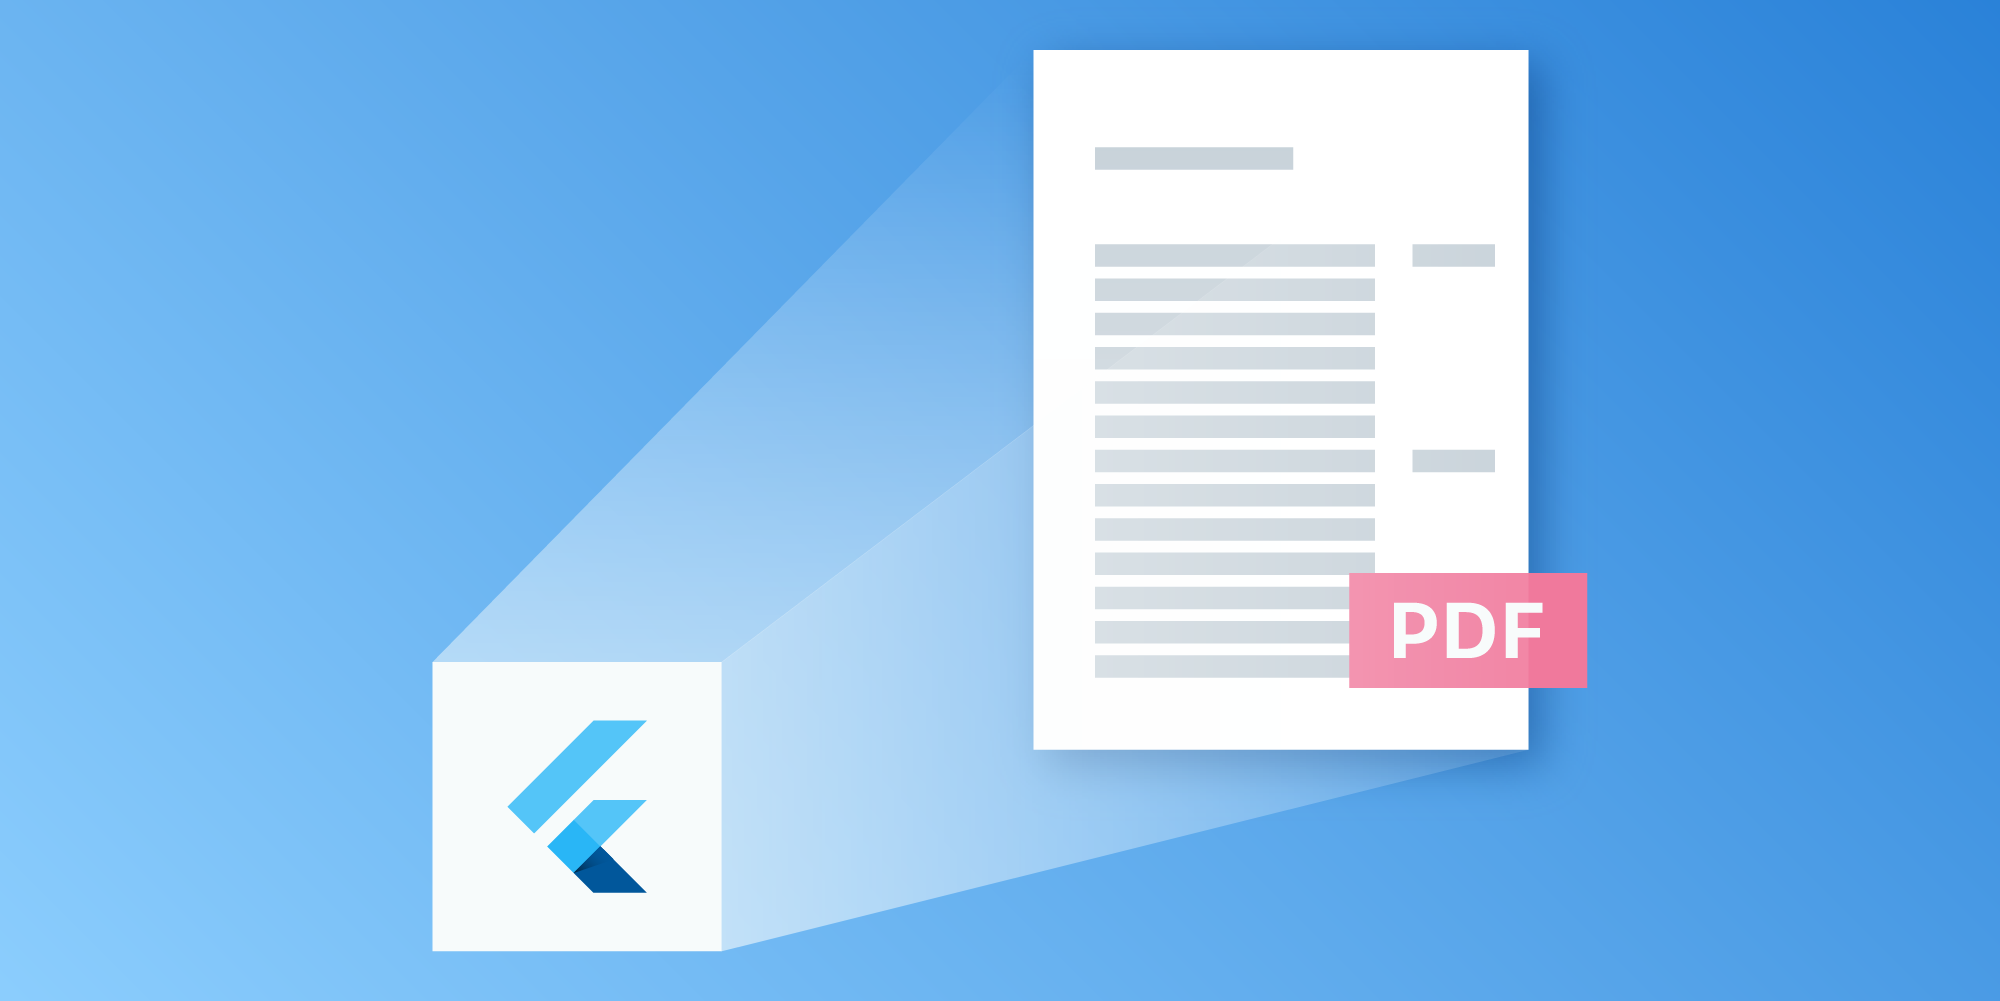 Illustration: How to Open a PDF in Flutter using flutter_full_pdf_viewer